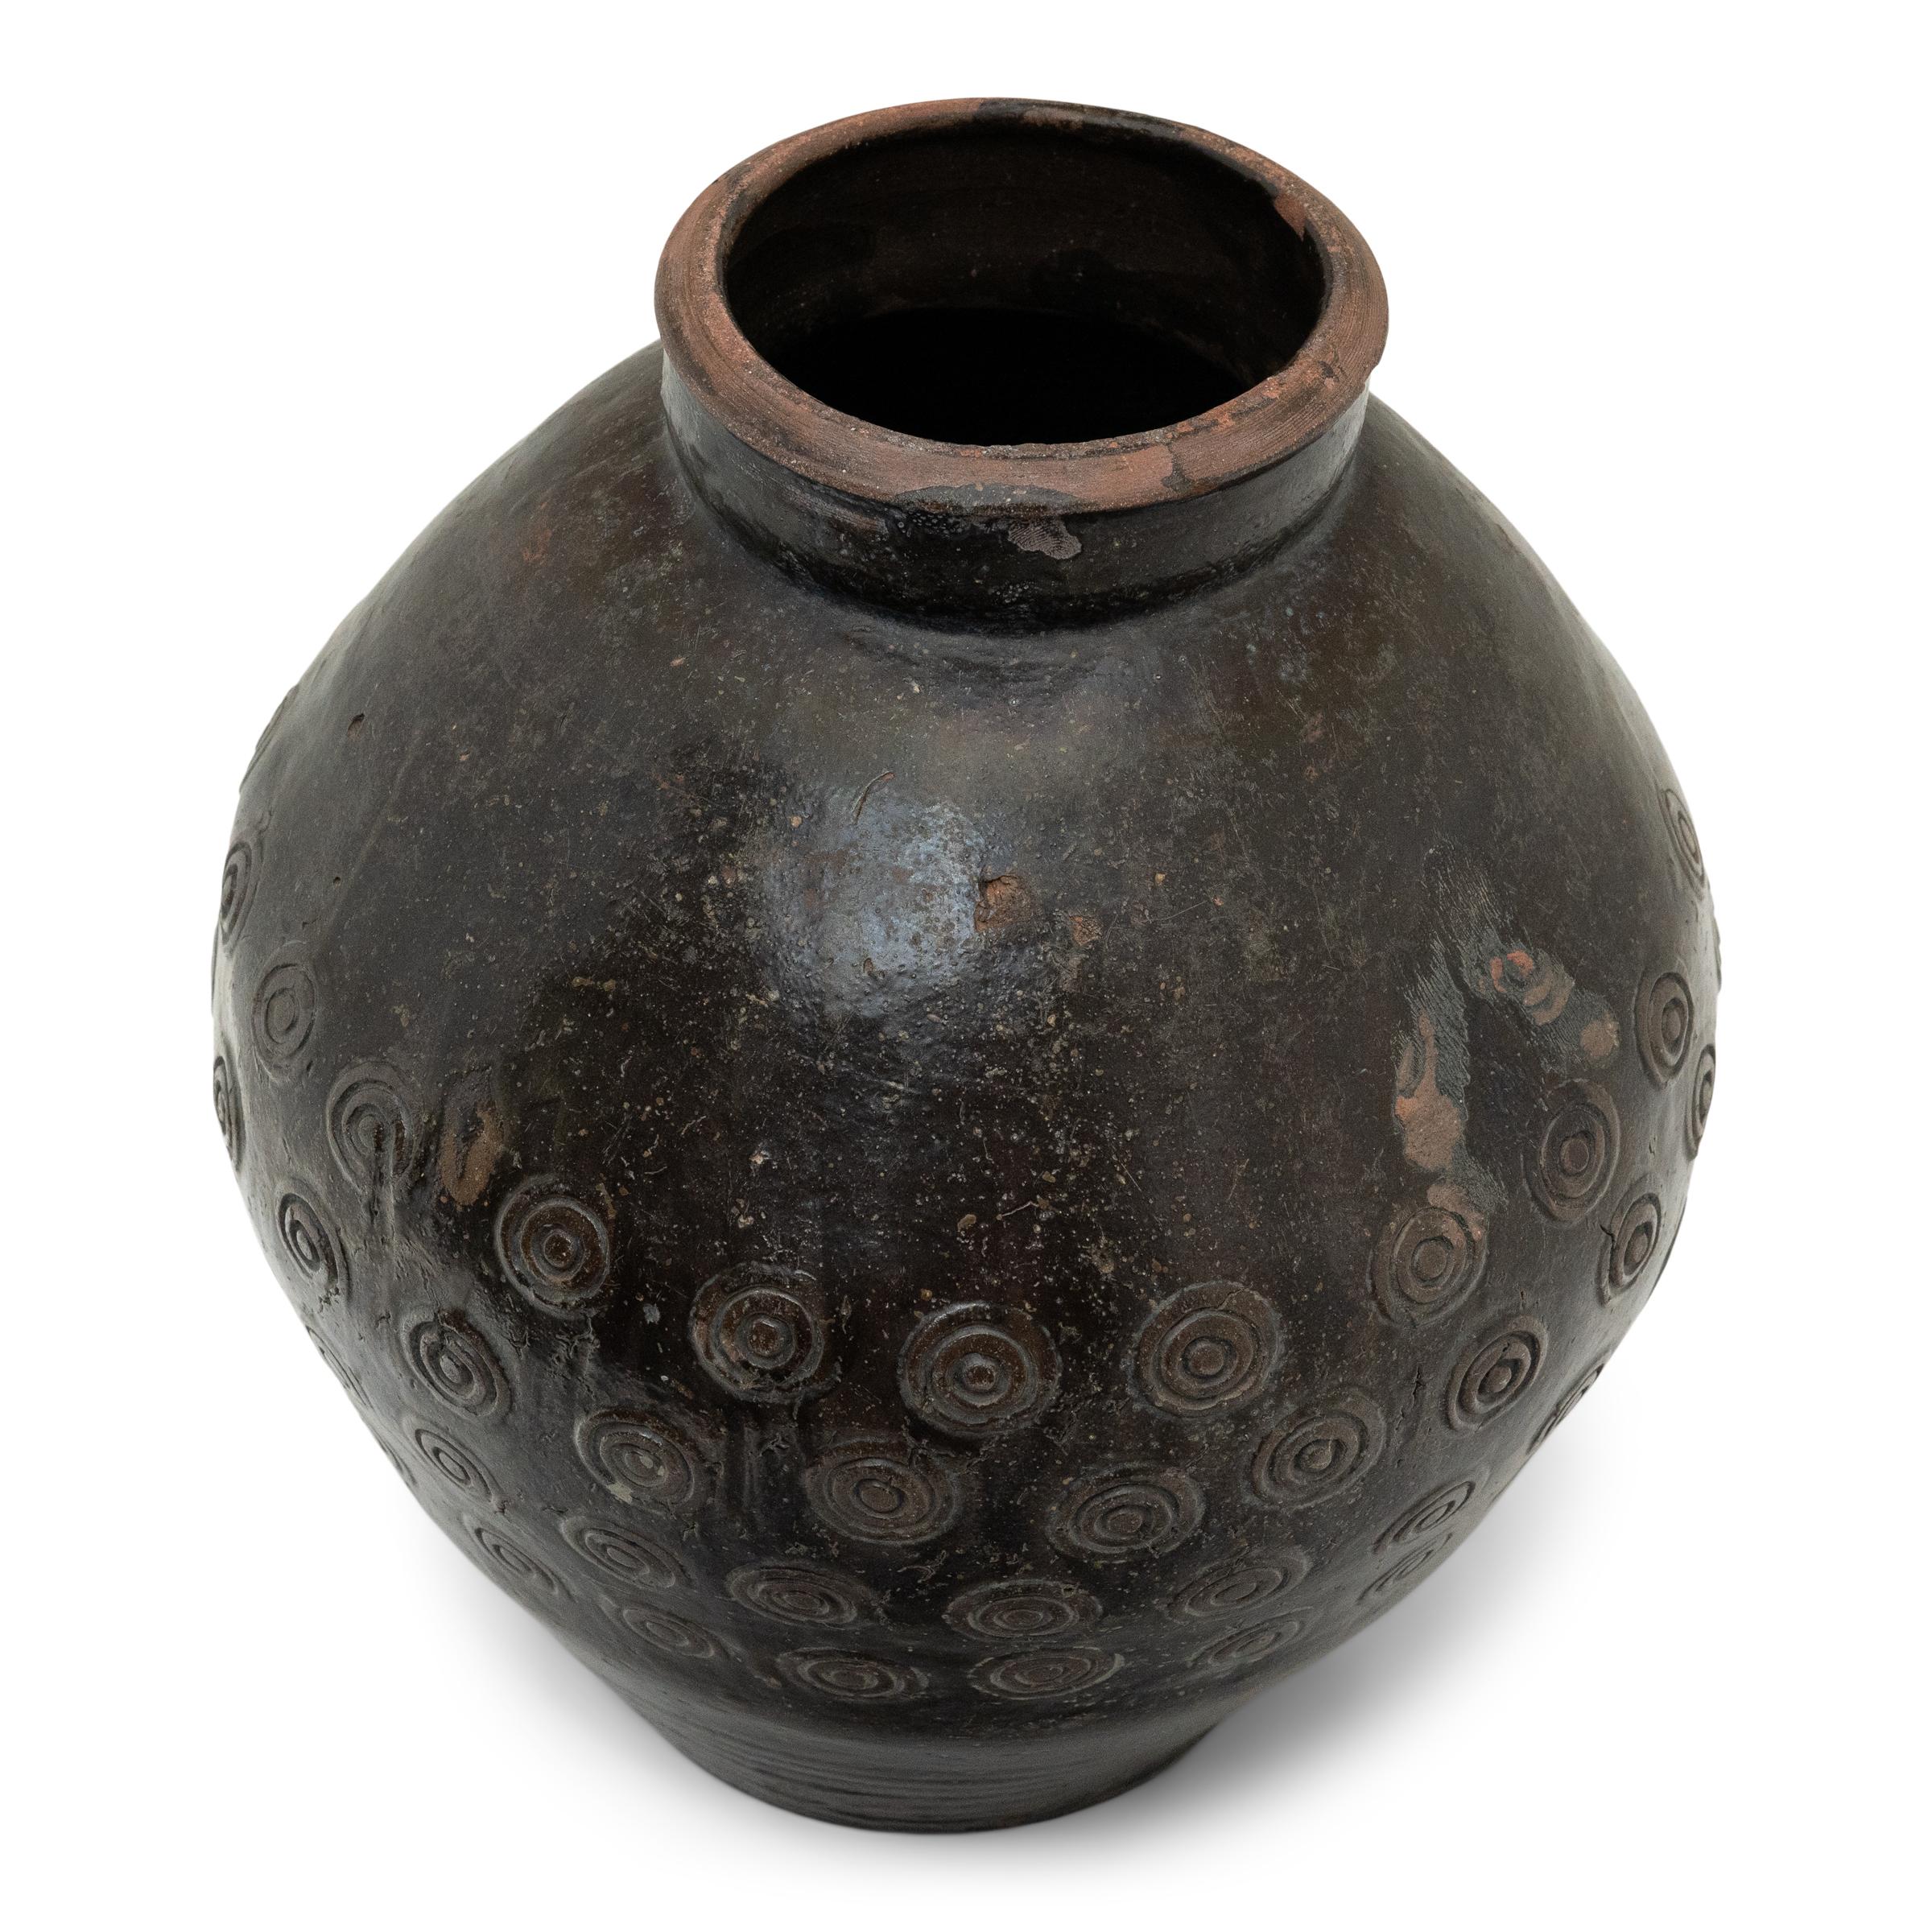 Qing Stamped Chinese Yunnan Pot, c. 1800